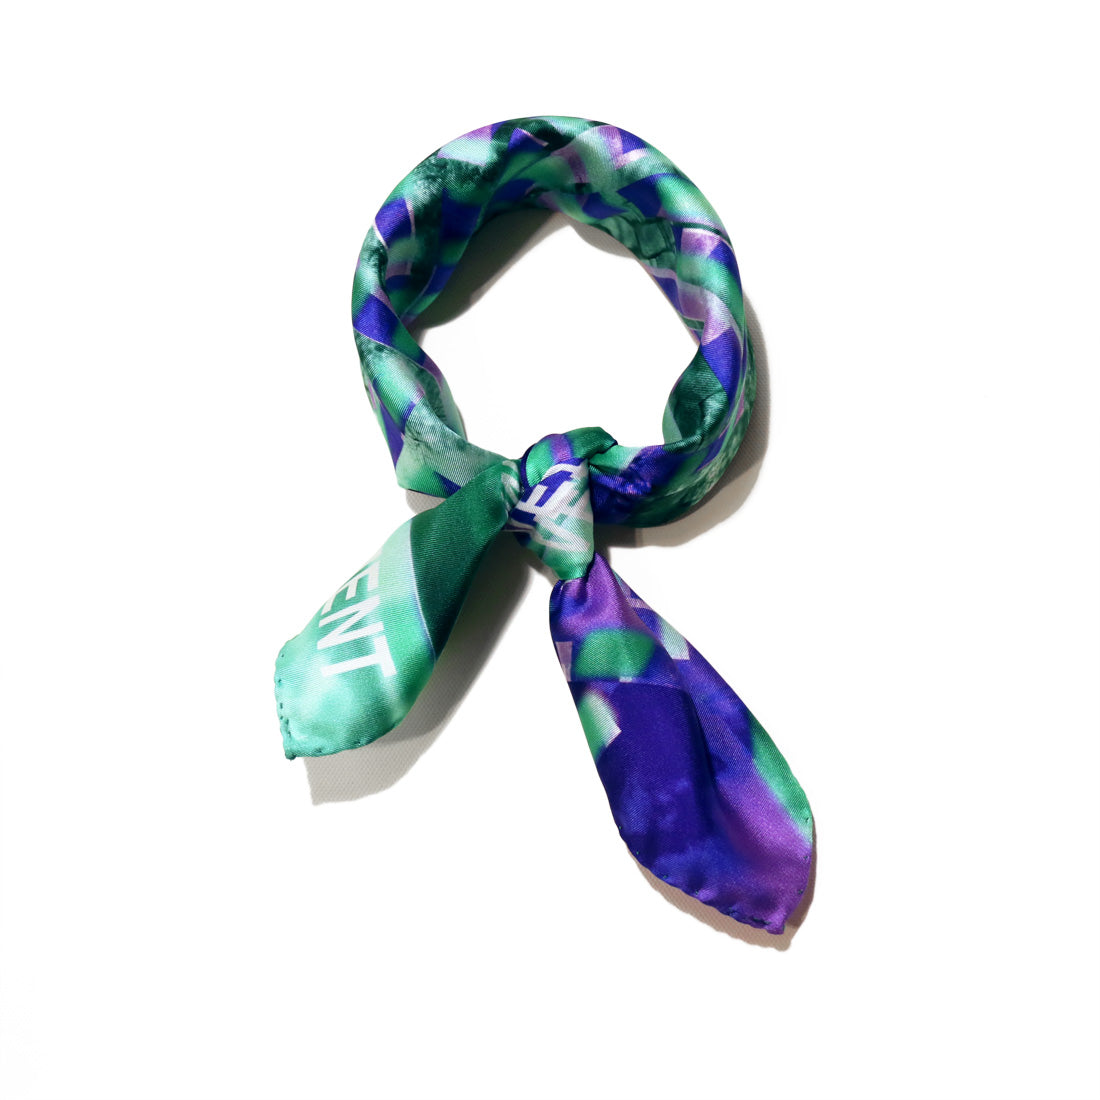 buy stylish fashion purple green silk scarf online paris taipei tokyo スカーフ from a friend of mine スカーフコーデ vetements harrods isetan dover street 買法式時尚精品絲巾義大利製